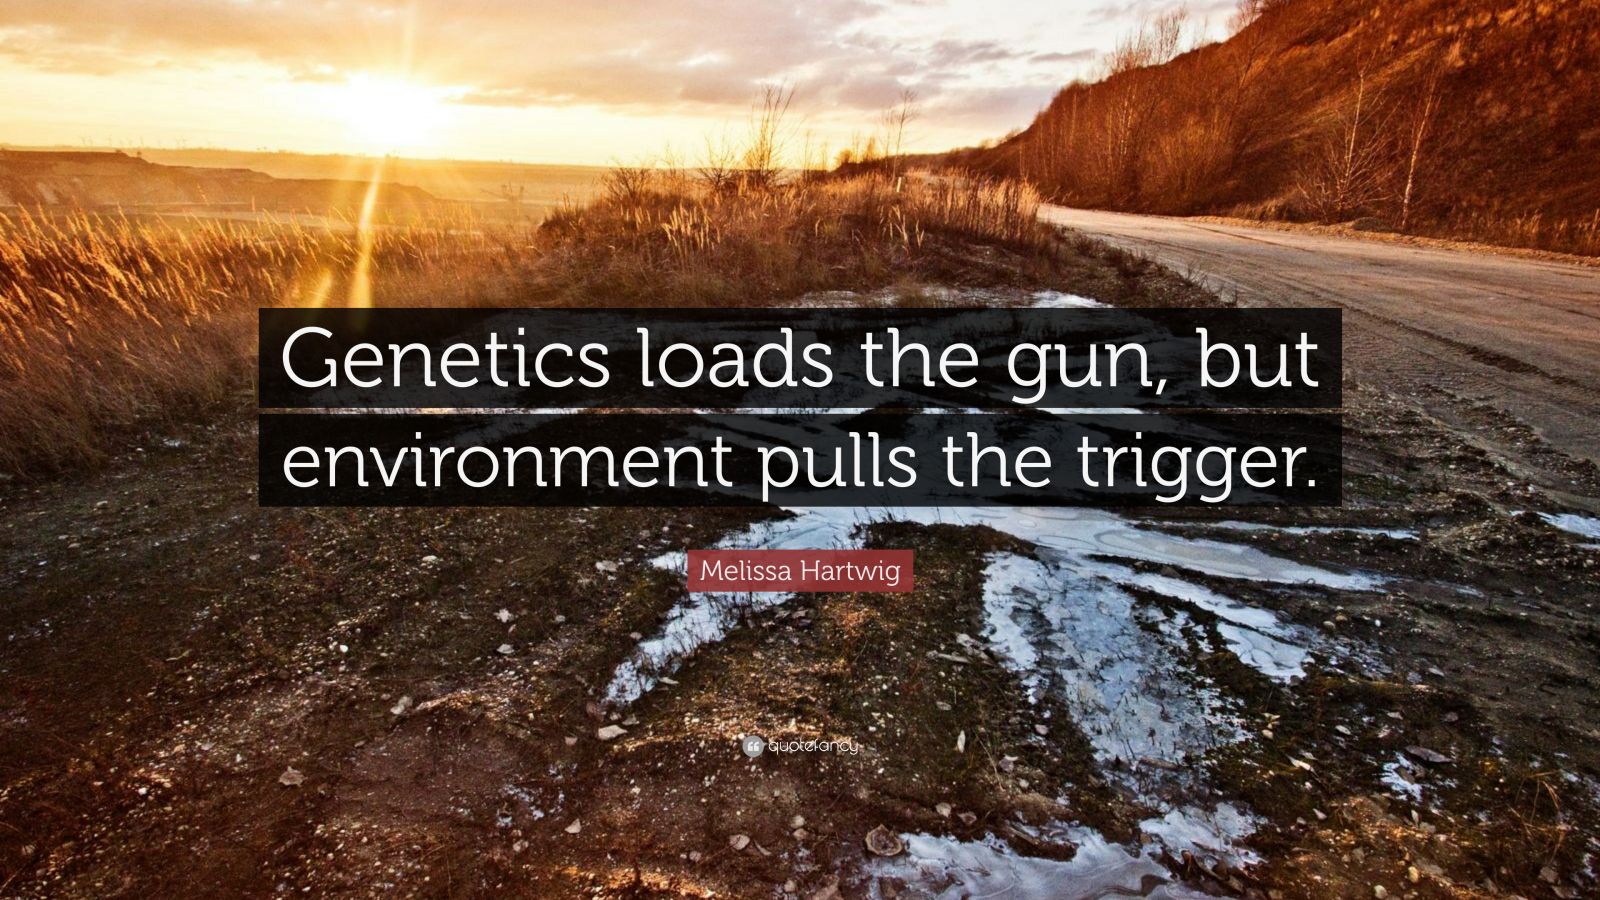 Melissa Hartwig Quote: “Genetics loads the gun, but environment pulls